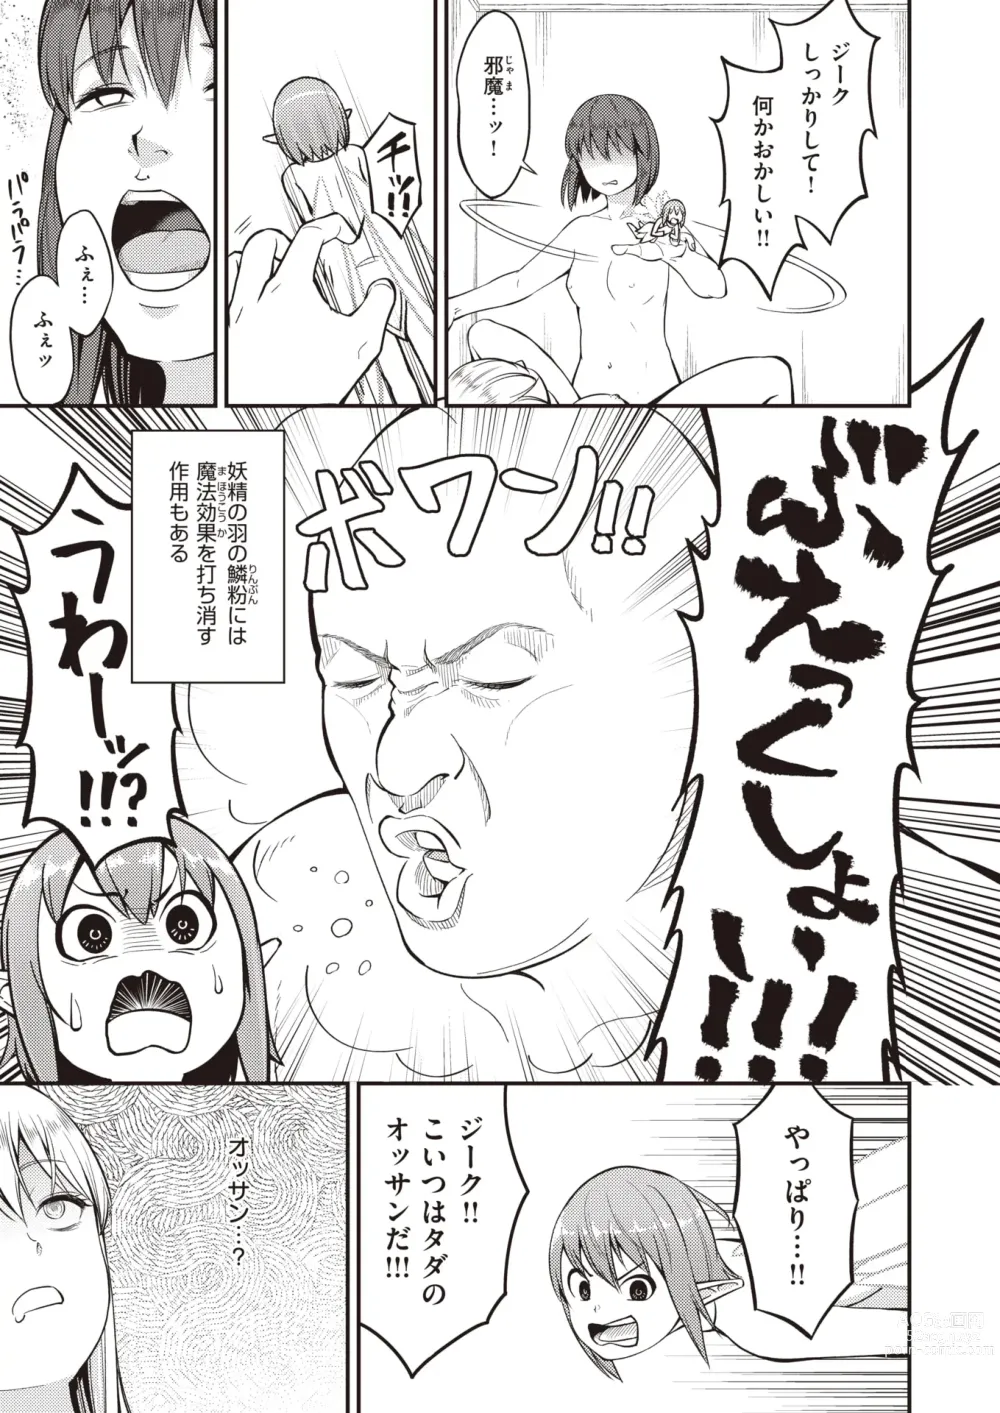 Page 62 of manga Isekai Rakuten Vol. 21